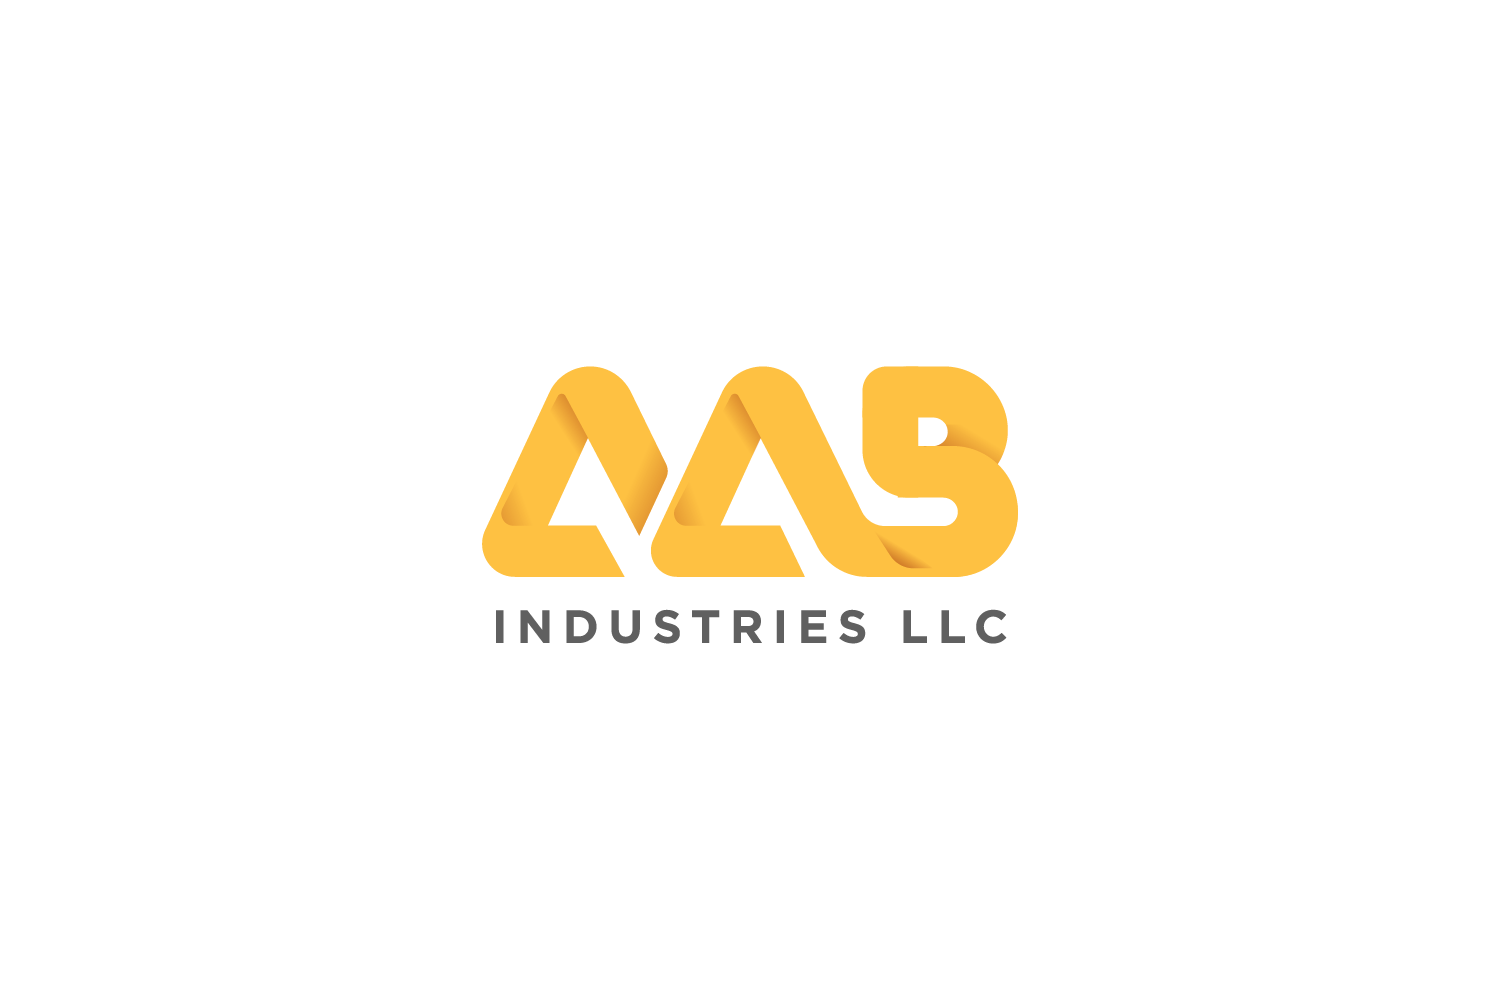 AAB_logo.png